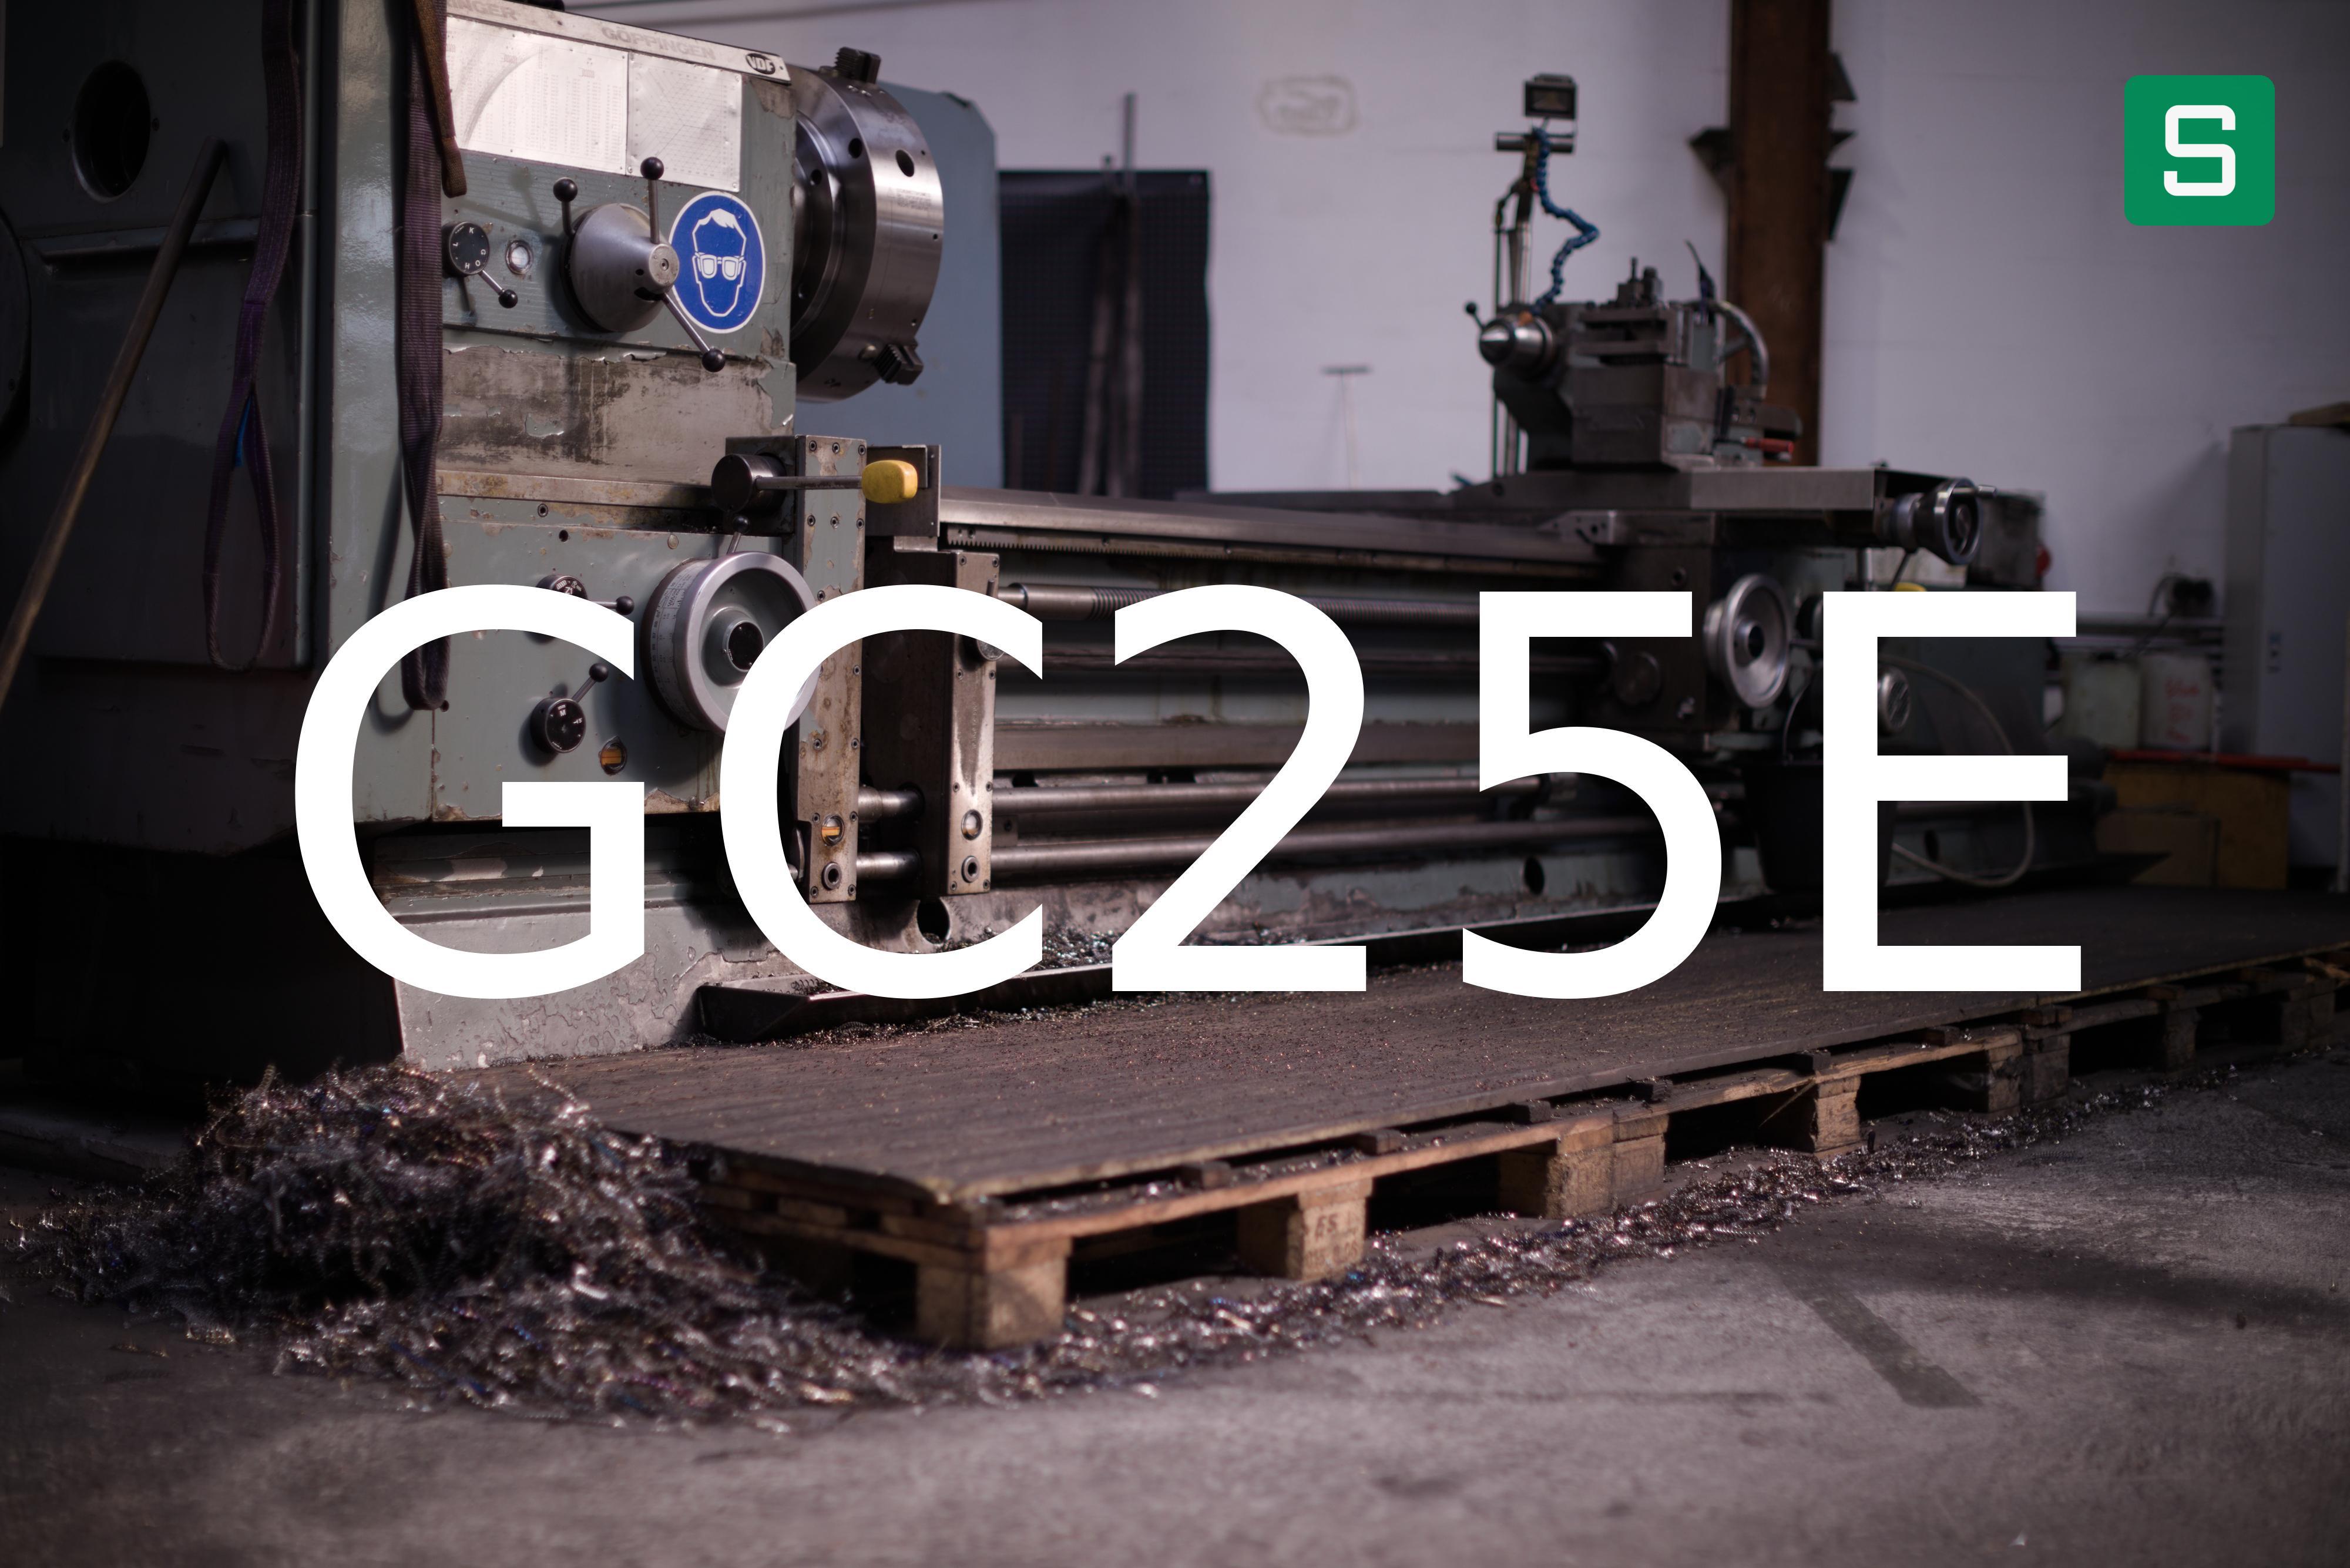 Steel Material: GC25E